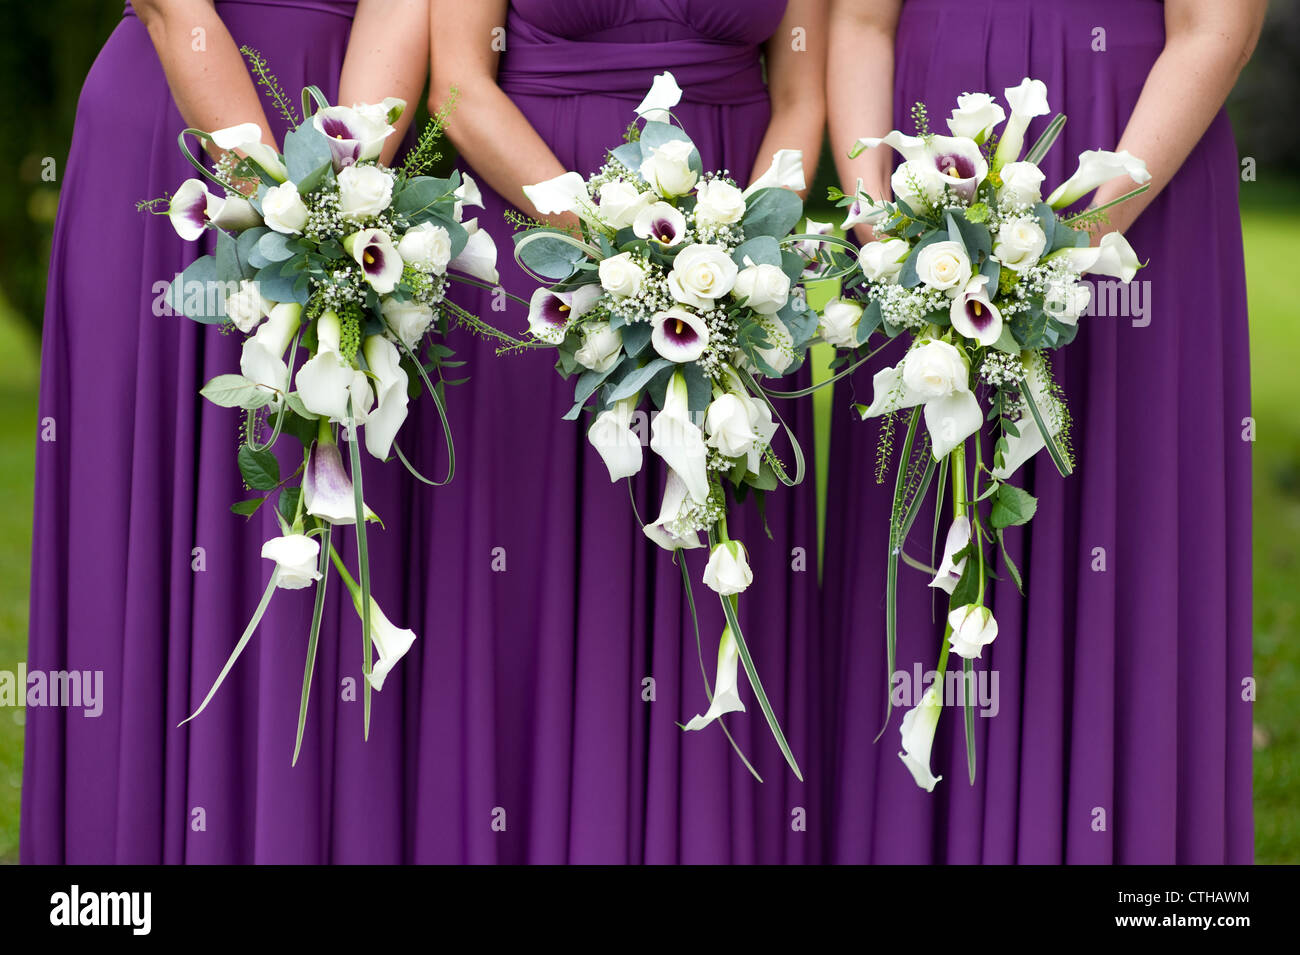 Tre damigelle in abiti viola holding bouquet nuziali Foto Stock